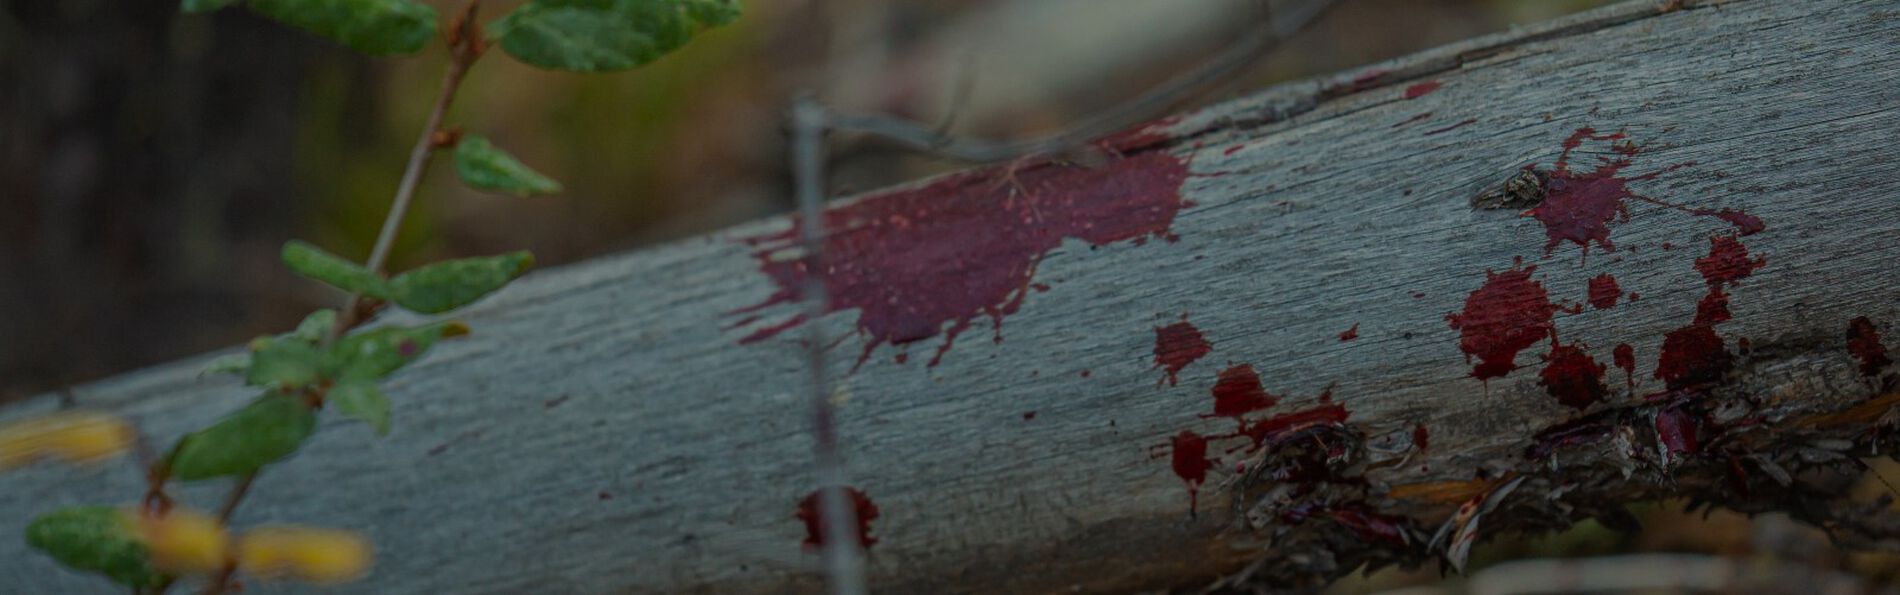 blood drops on a log